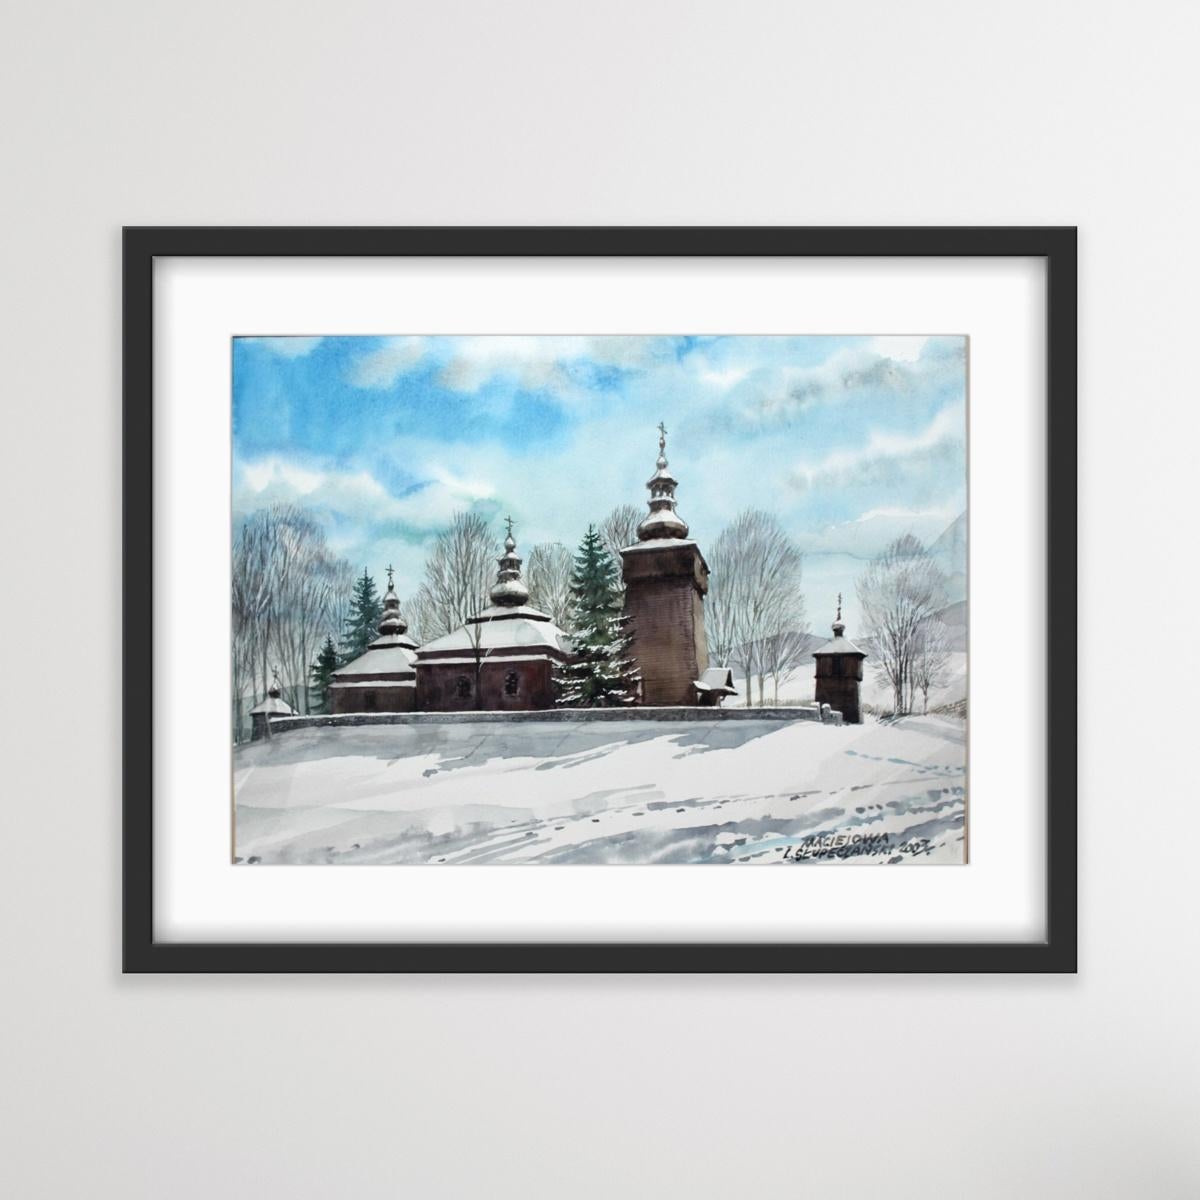 Maciejowa - Contemporary Watercolor Painting, Winter landscape, Realistic  - Photorealist Art by Ludomir Slupeczanski